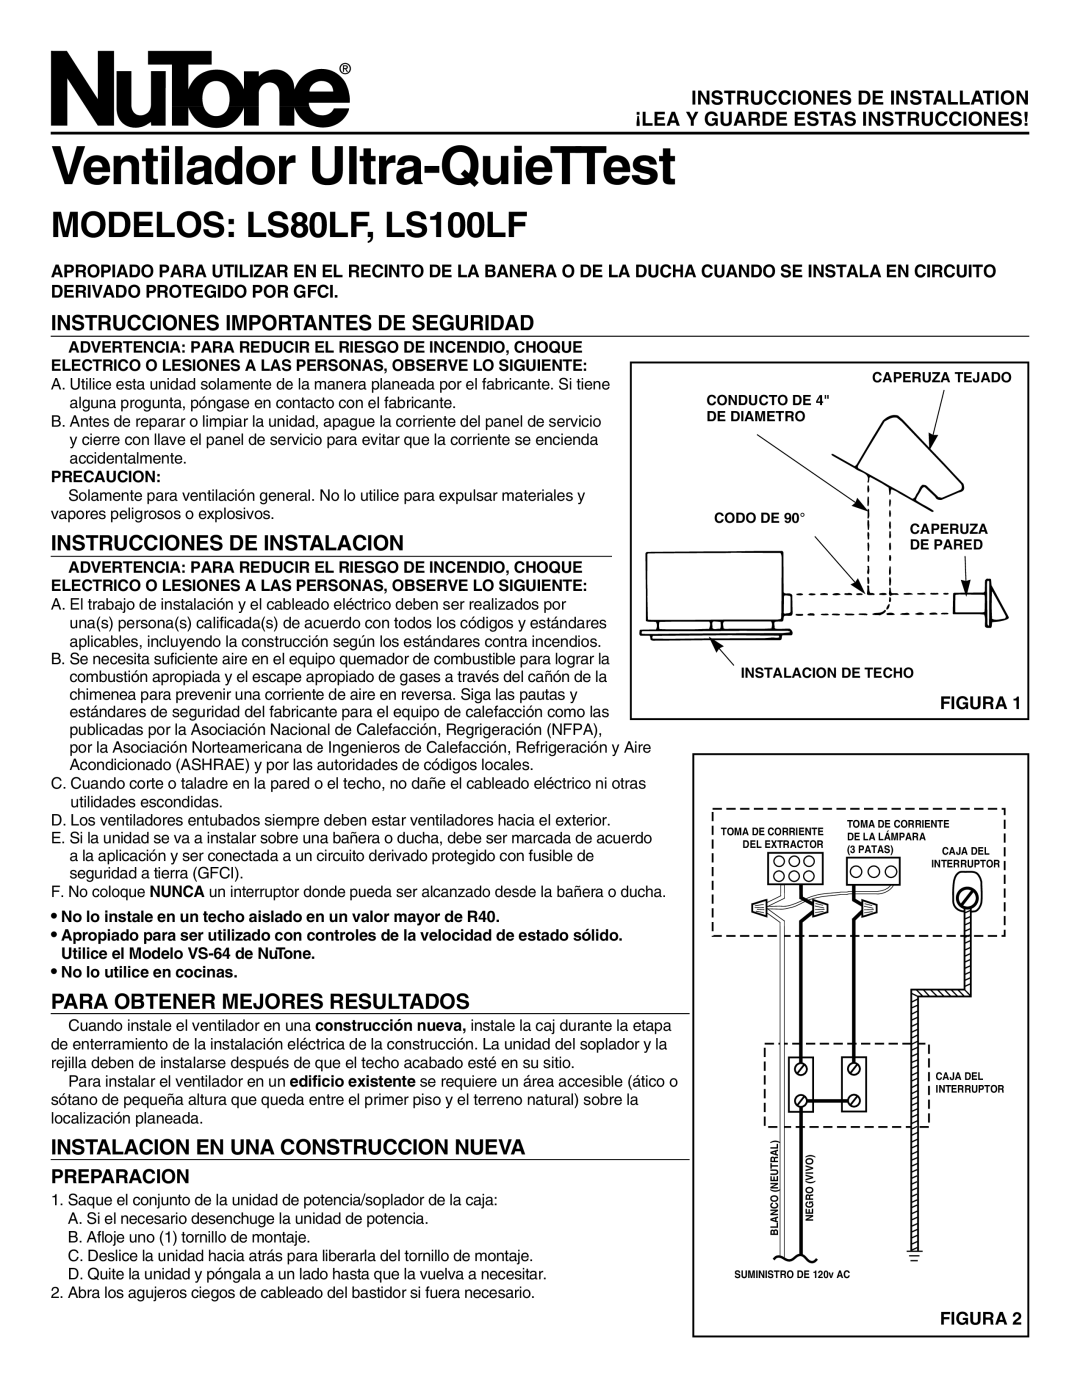 NuTone Ventilador Ultra-QuieTTest, MODELOS LS80LF, LS100LF, Instrucciones Importantes De Seguridad, Preparacion, Figura 